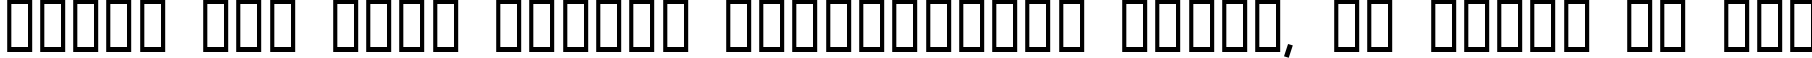 Пример написания шрифтом Klondike текста на русском